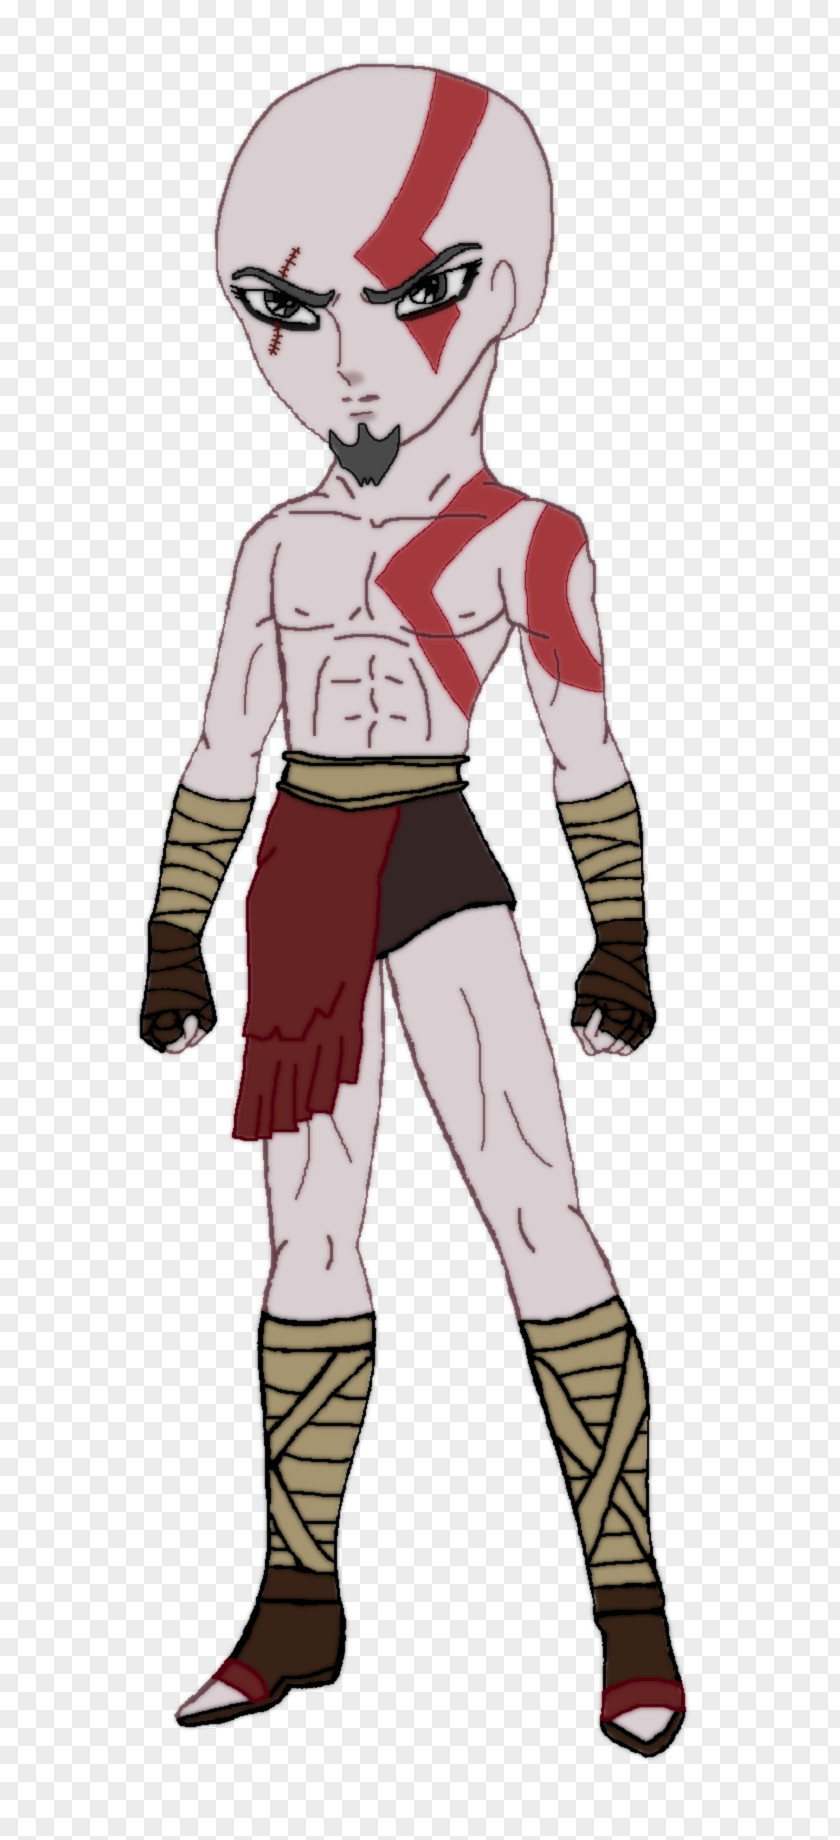 Kratos Armor Costume Legendary Creature Cartoon Mascot PNG